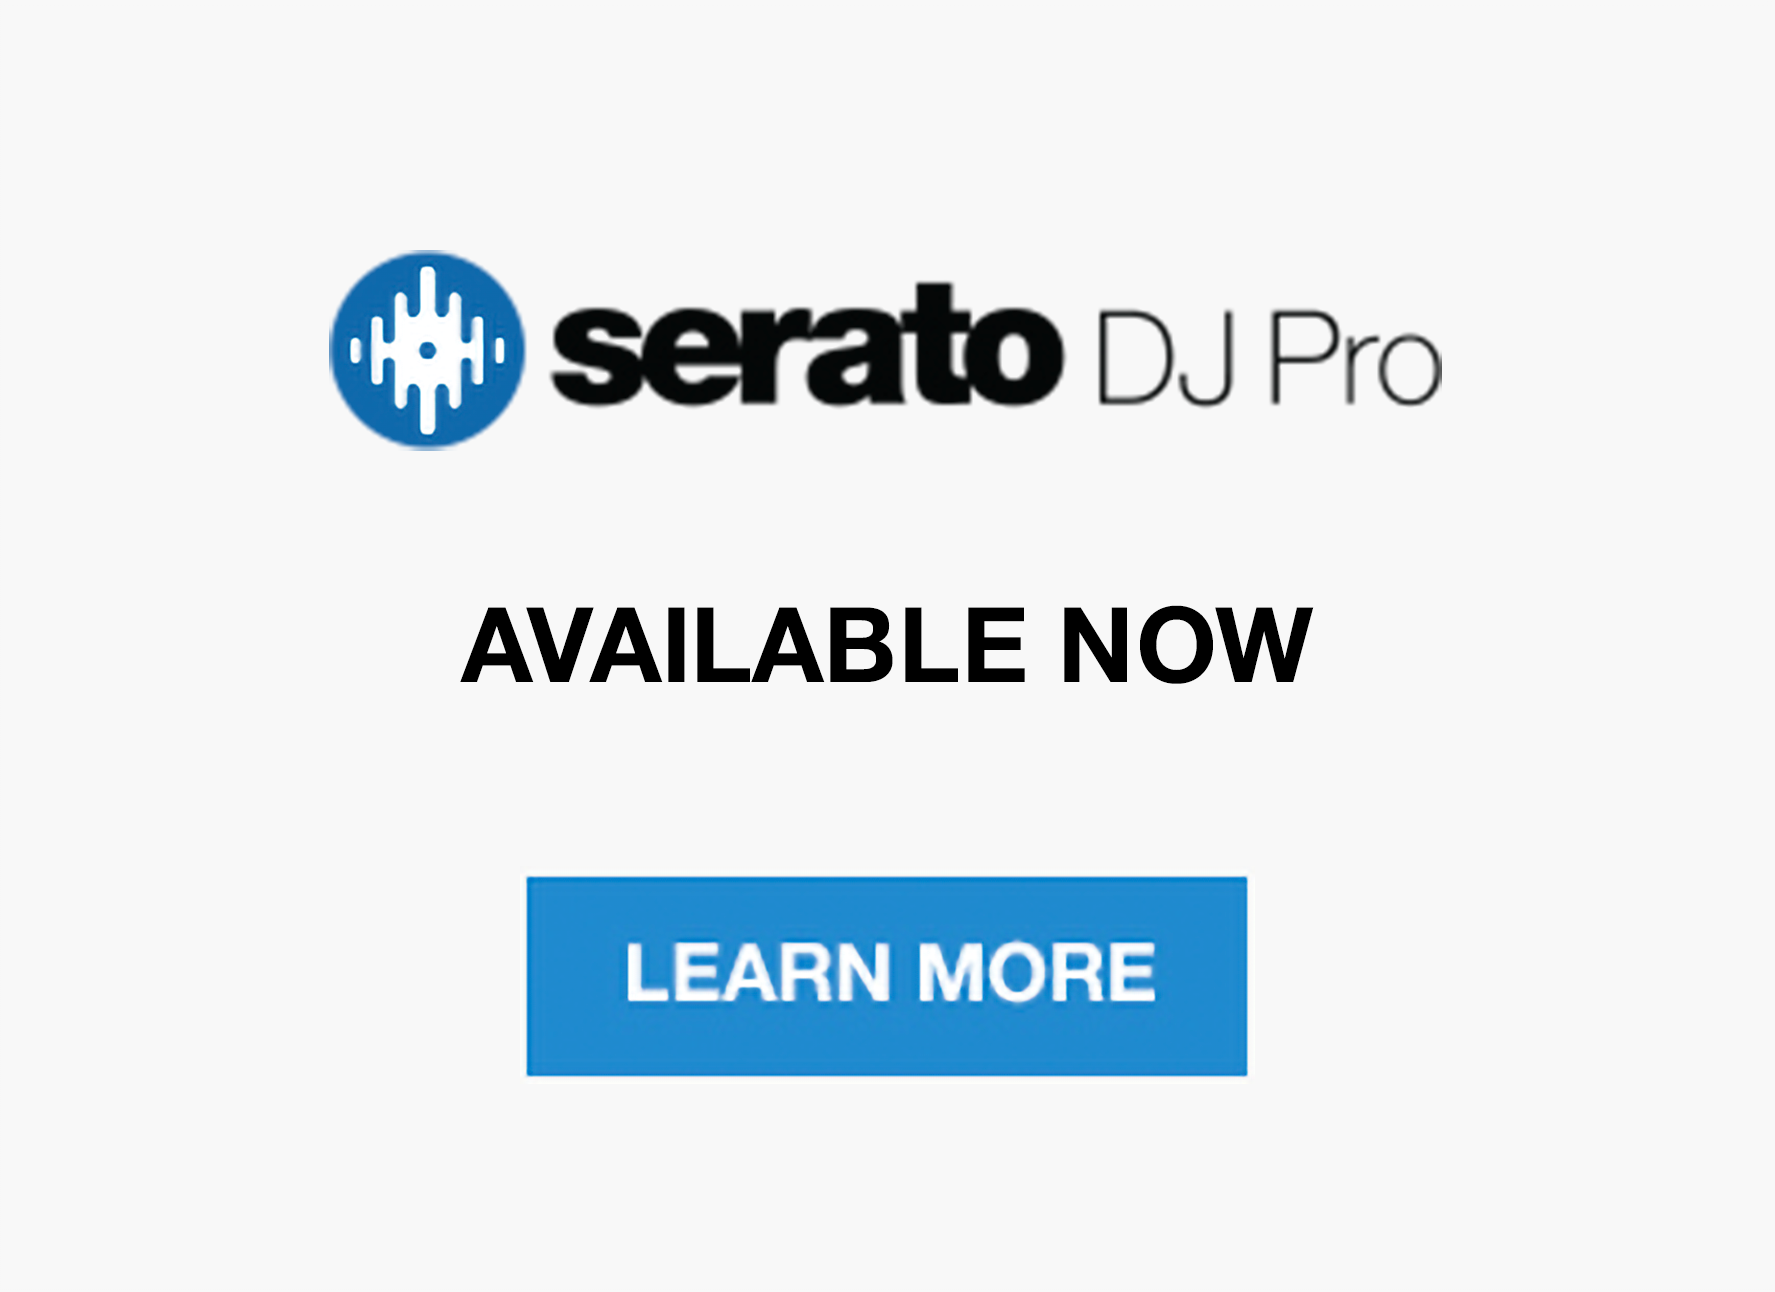 Learn more about Serato DJ Pro